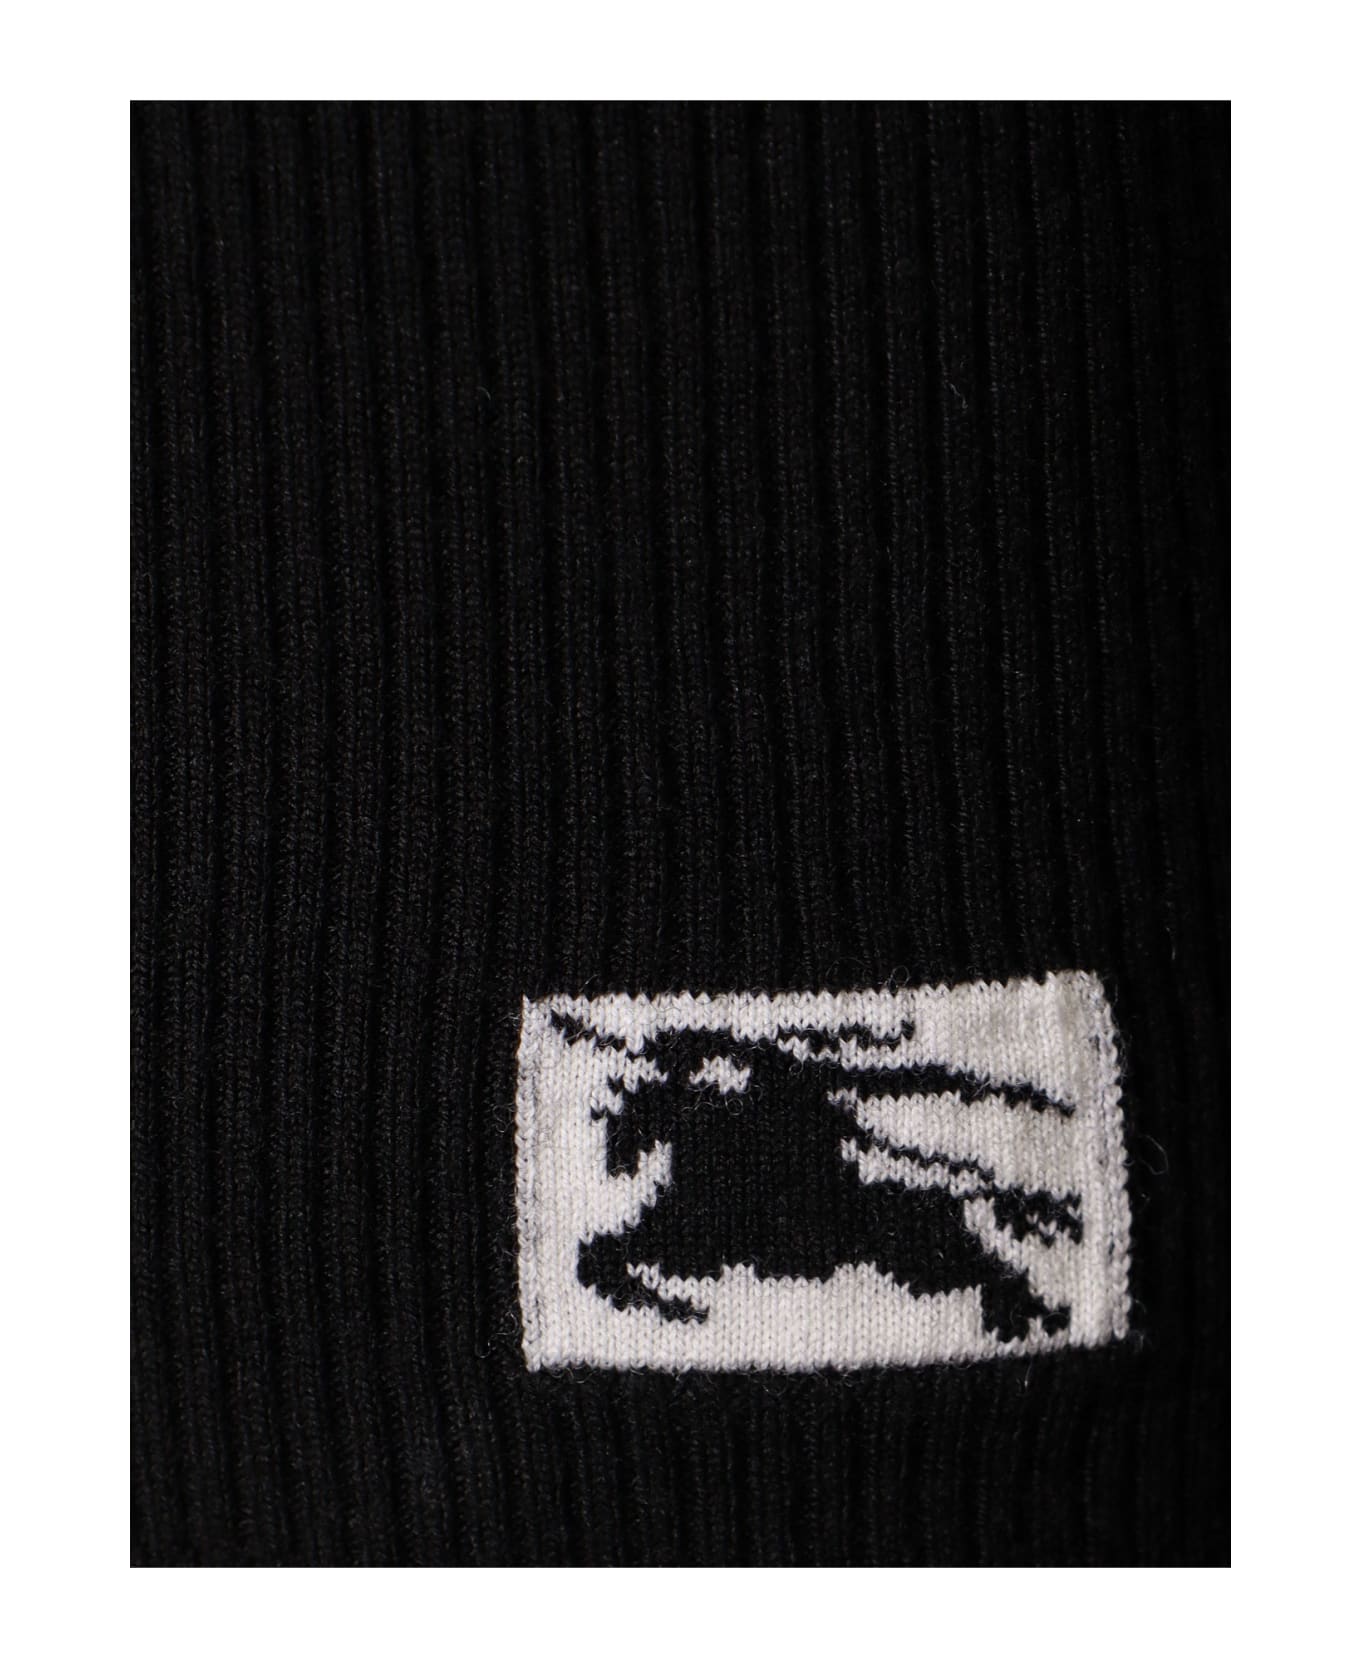 Burberry Sweater - Black